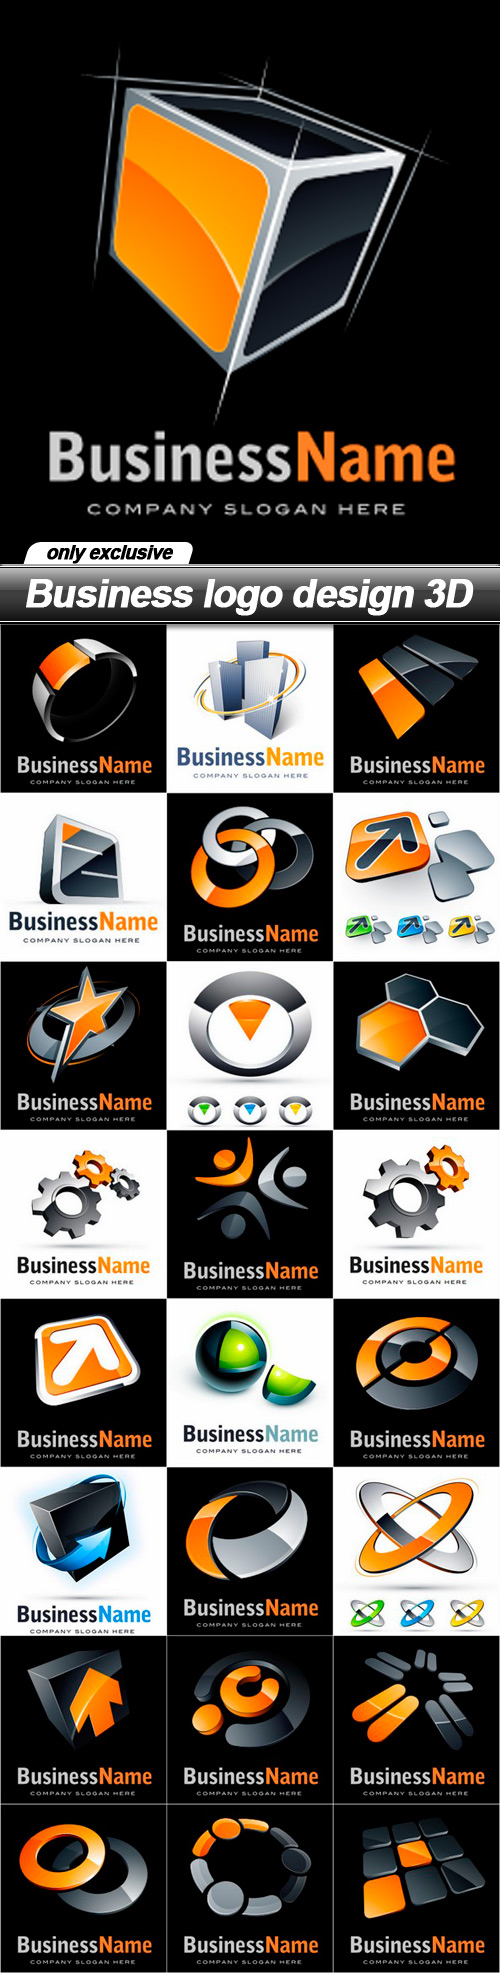 Business logo design 3D - 25 EPS